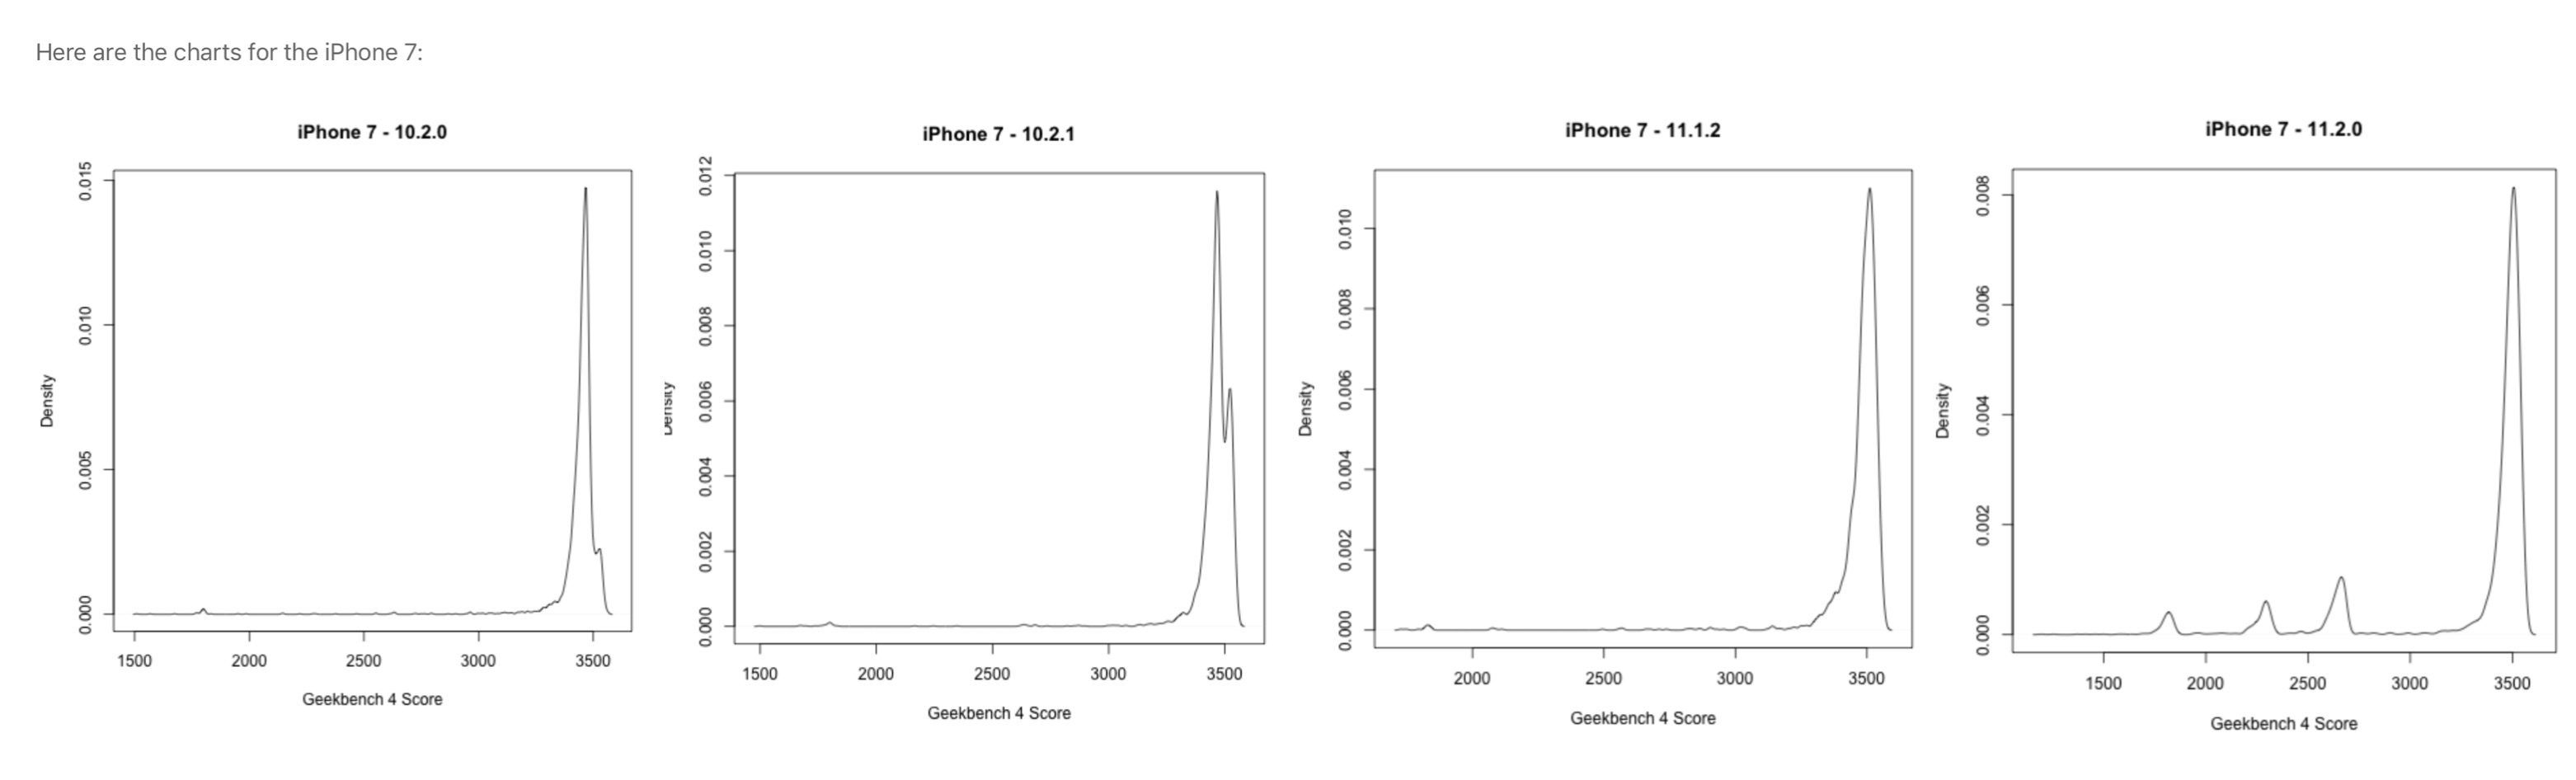 Masalah yang sama juga menimpa iPhone 7 yang diupdate ke OS 11.2